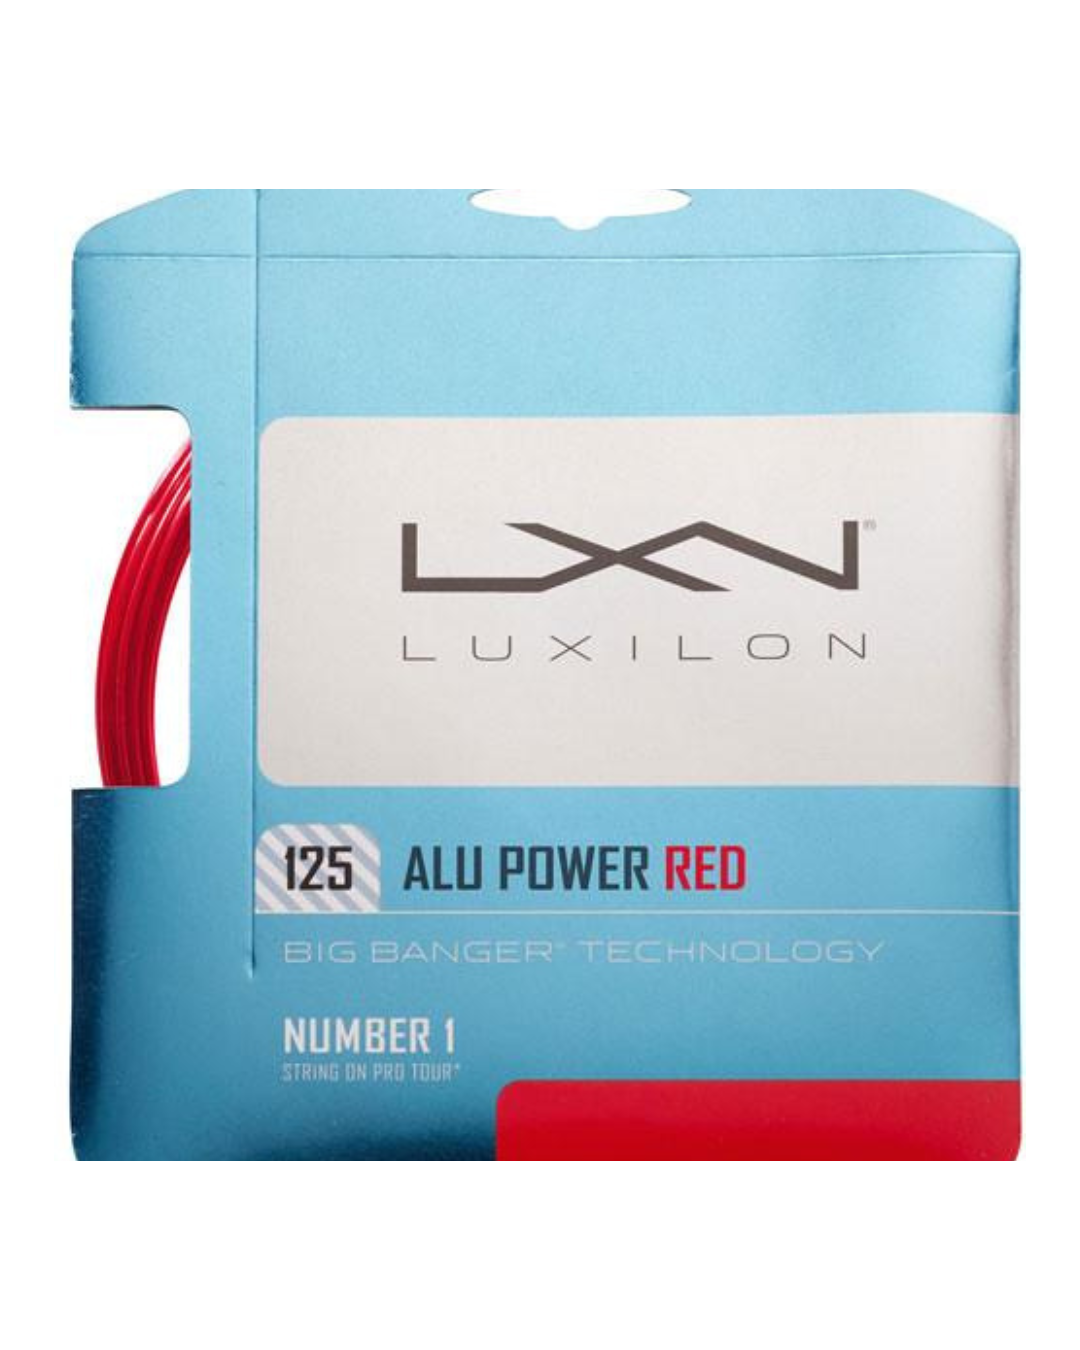 Luxilon Alu Power Red 125